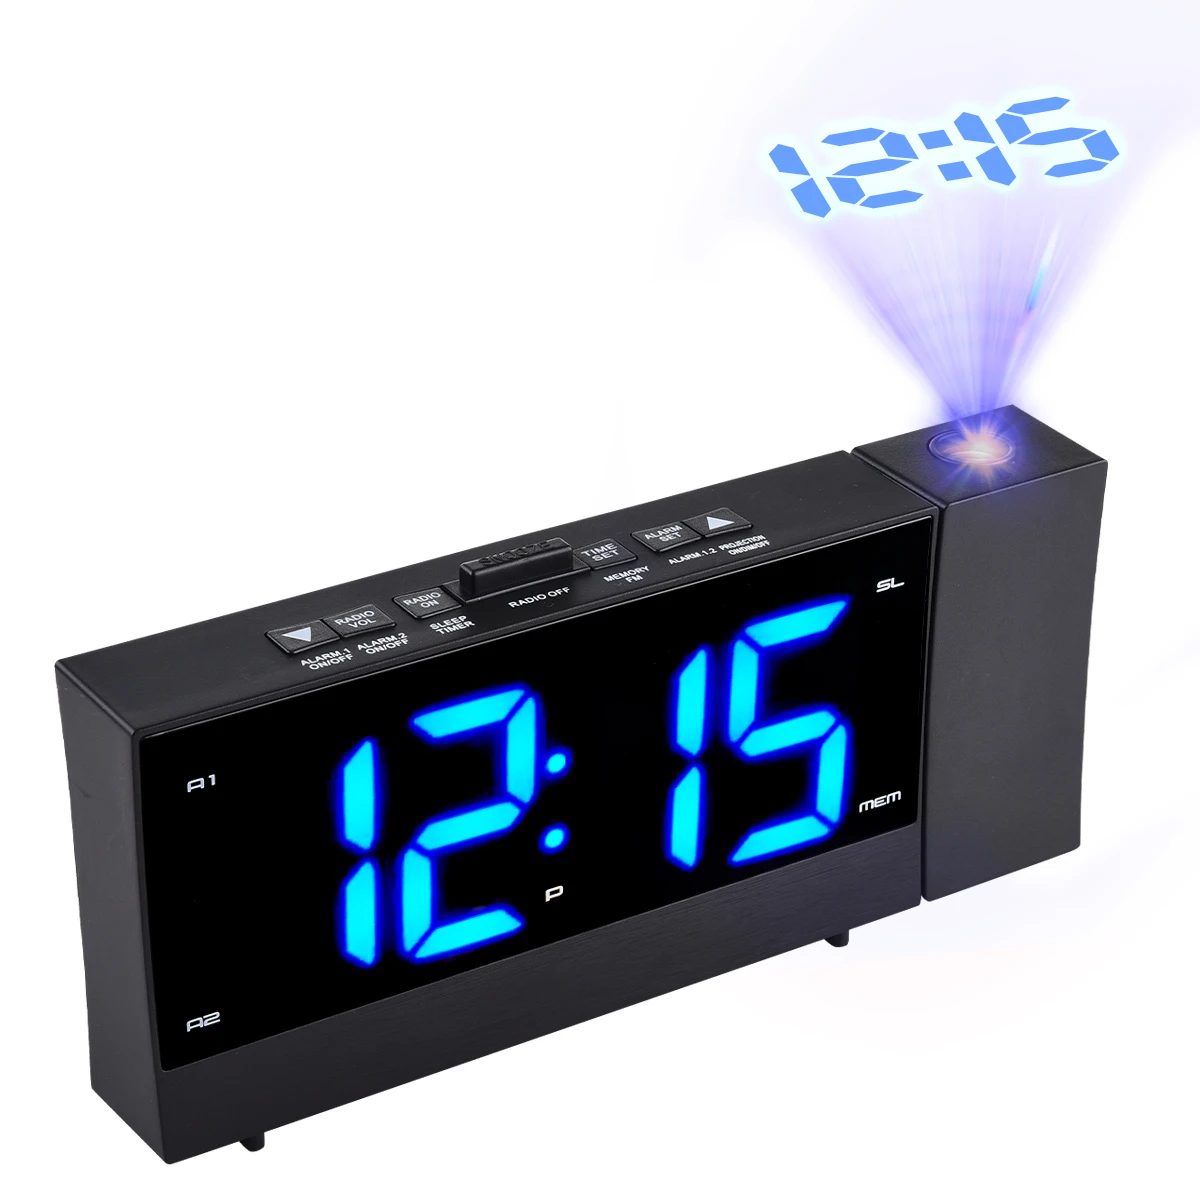 USB Charging Projector FM Radio Digital Countdown Factory Projection Alarm Led Clock